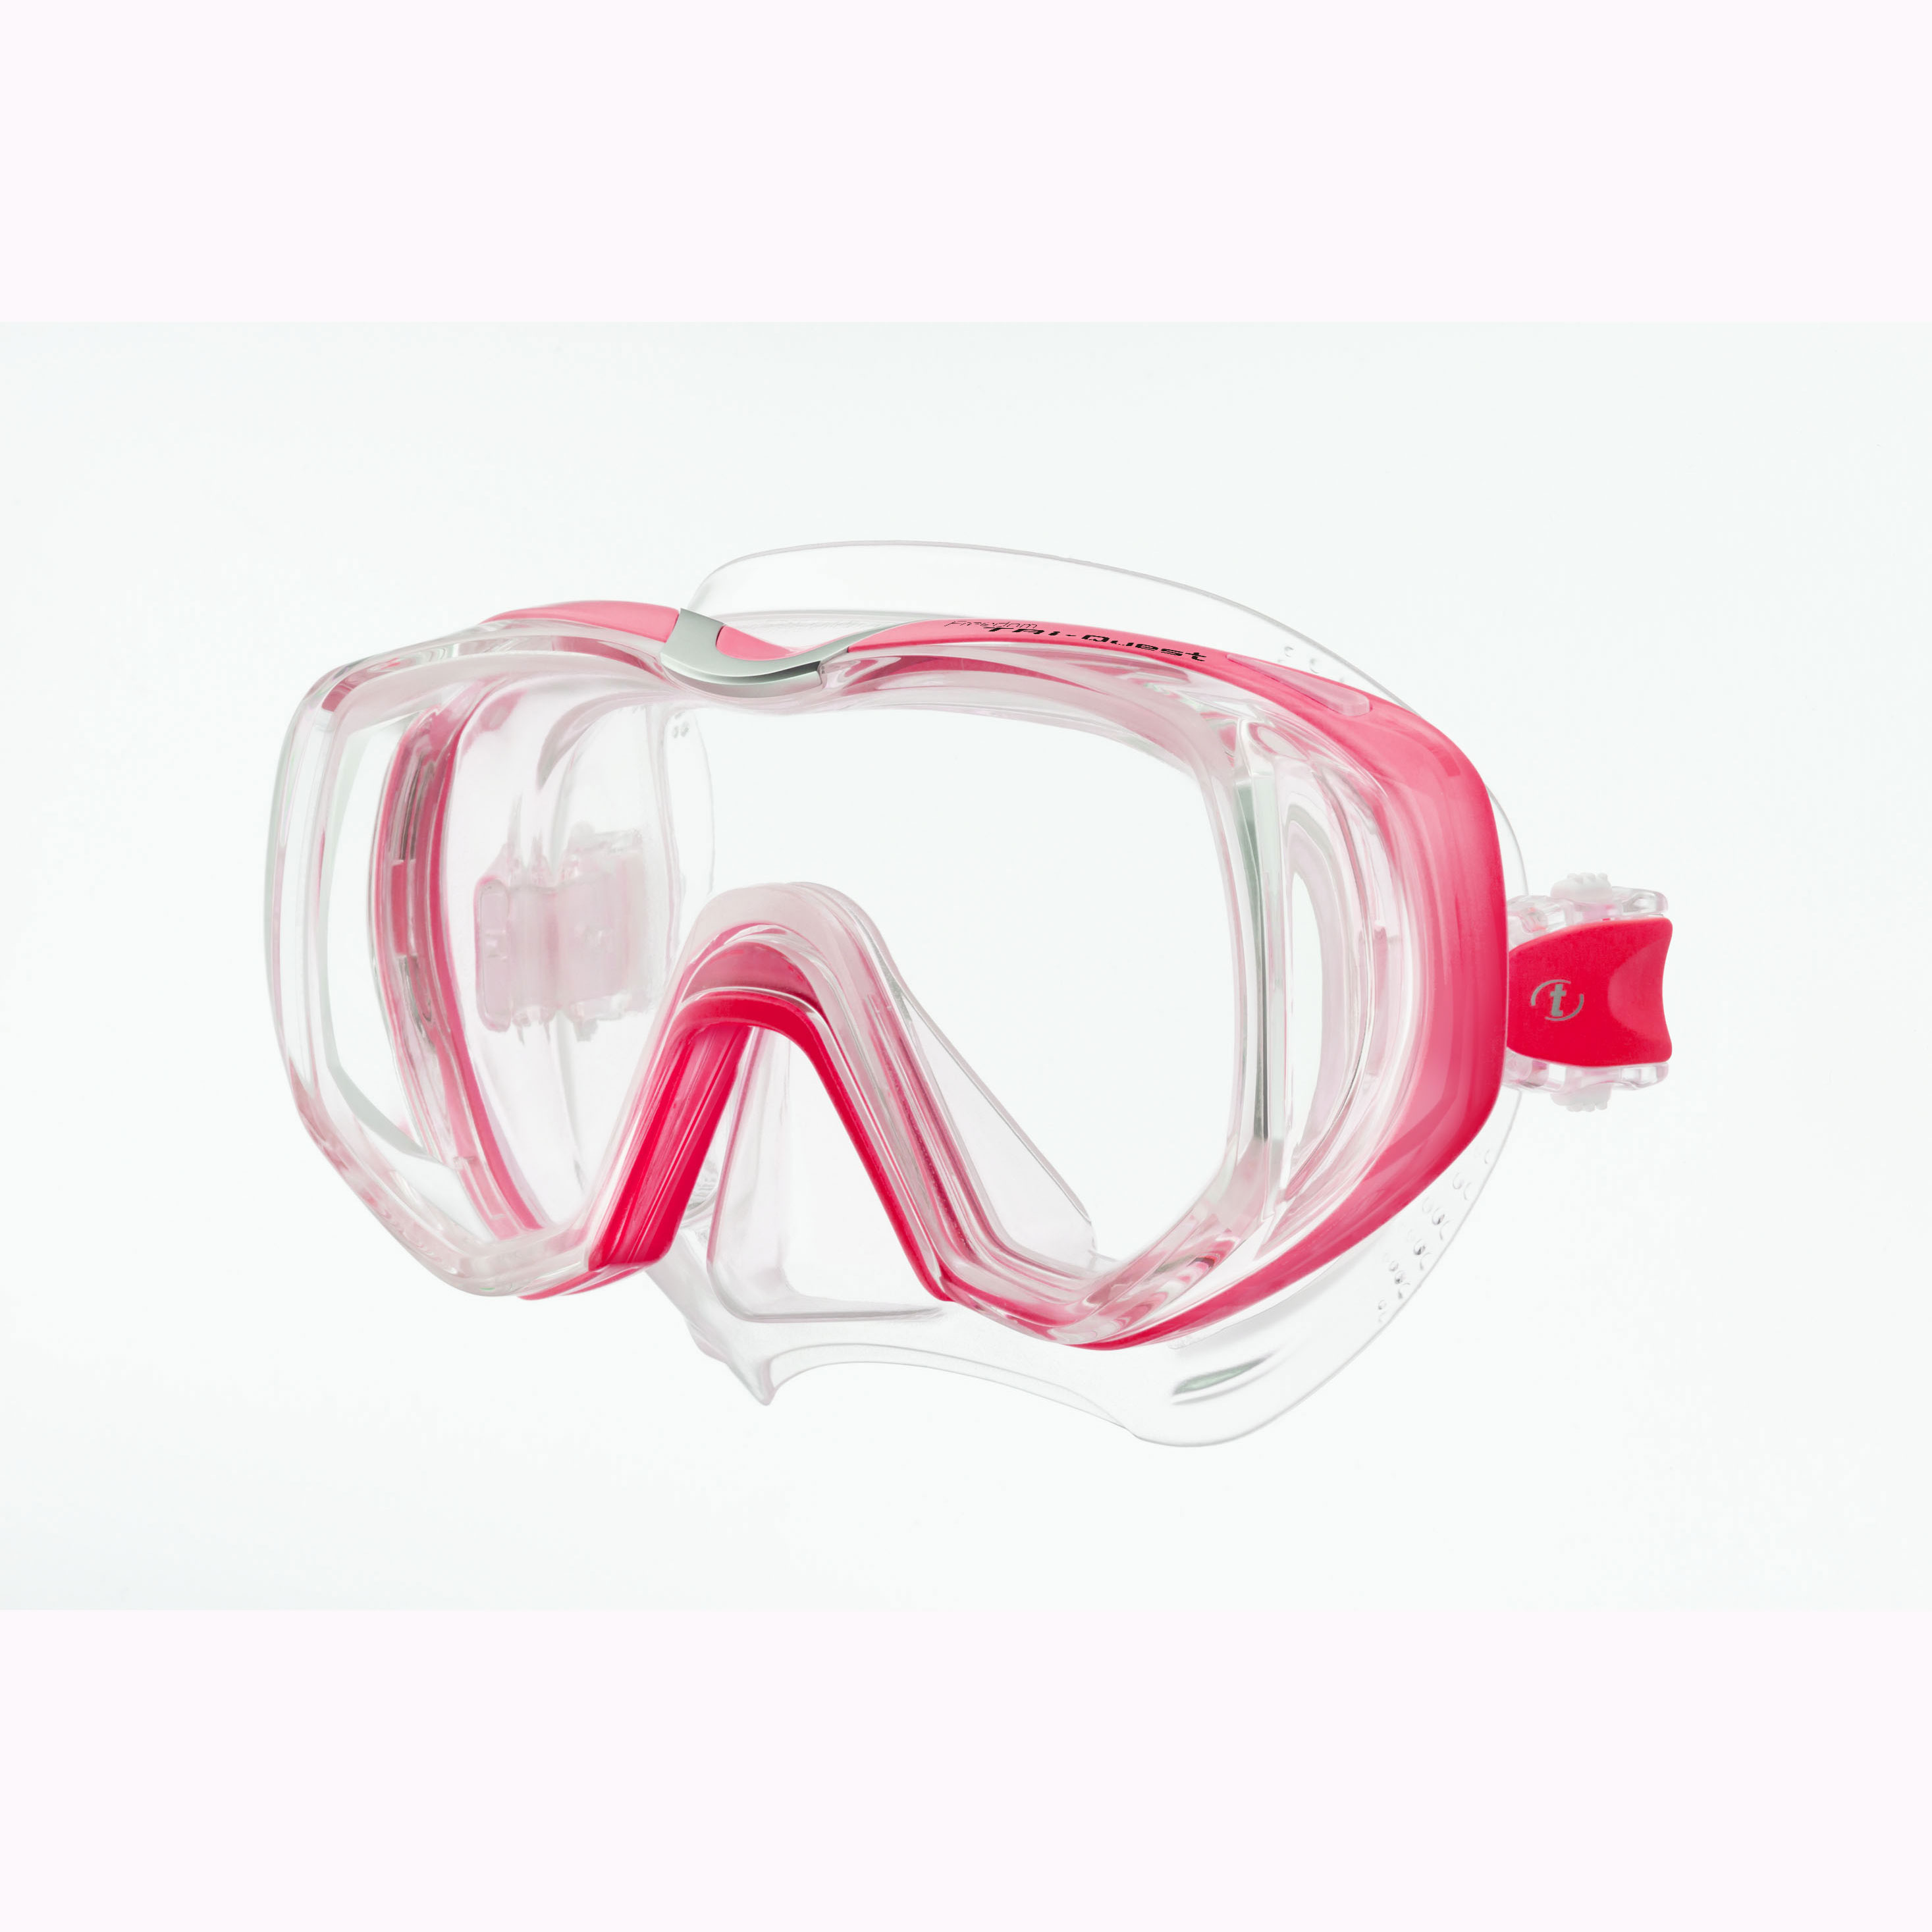 TUSA Tri-Quest Mask, Wraparound Lens - Clear/Pink